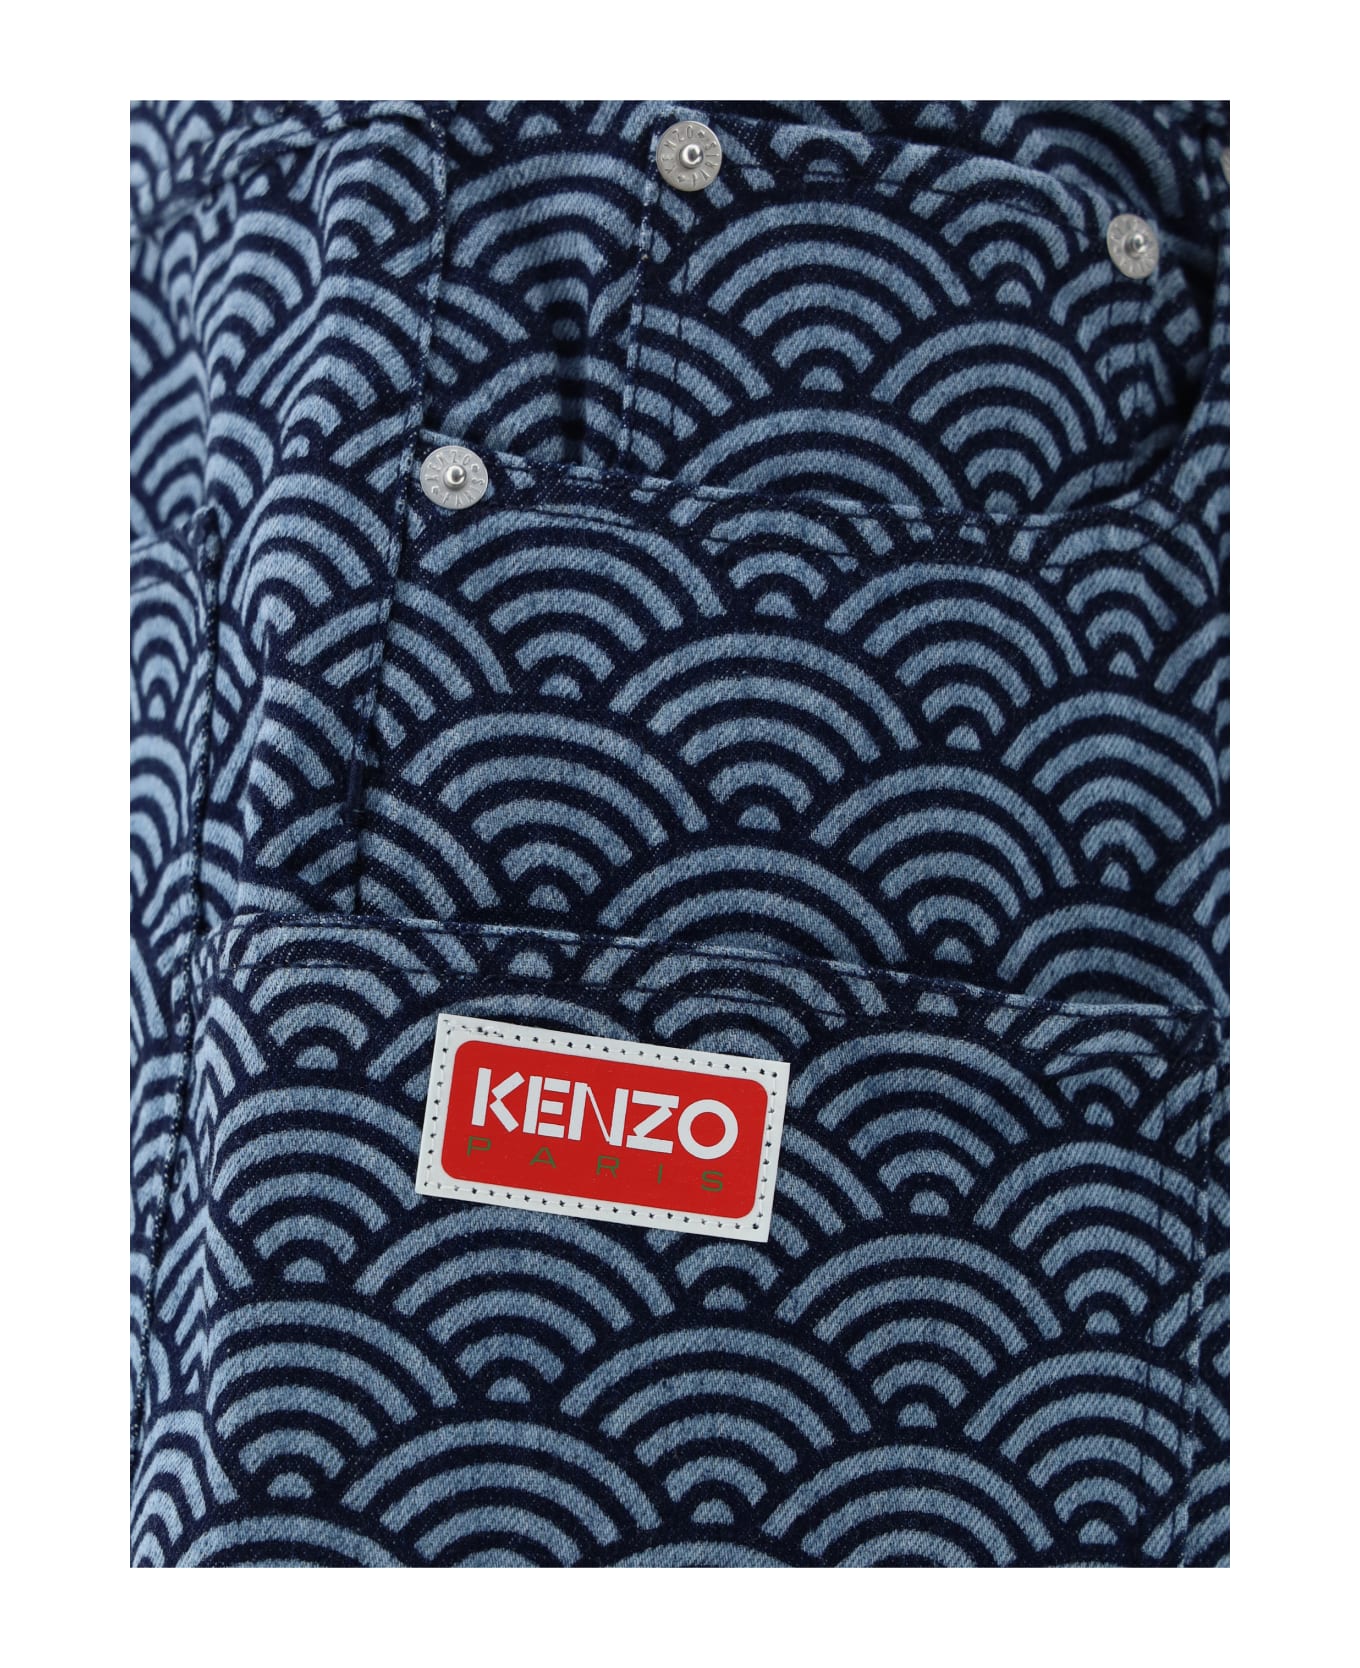 Kenzo Printed Denim Cargo Jeans - Rinse Blue Denim